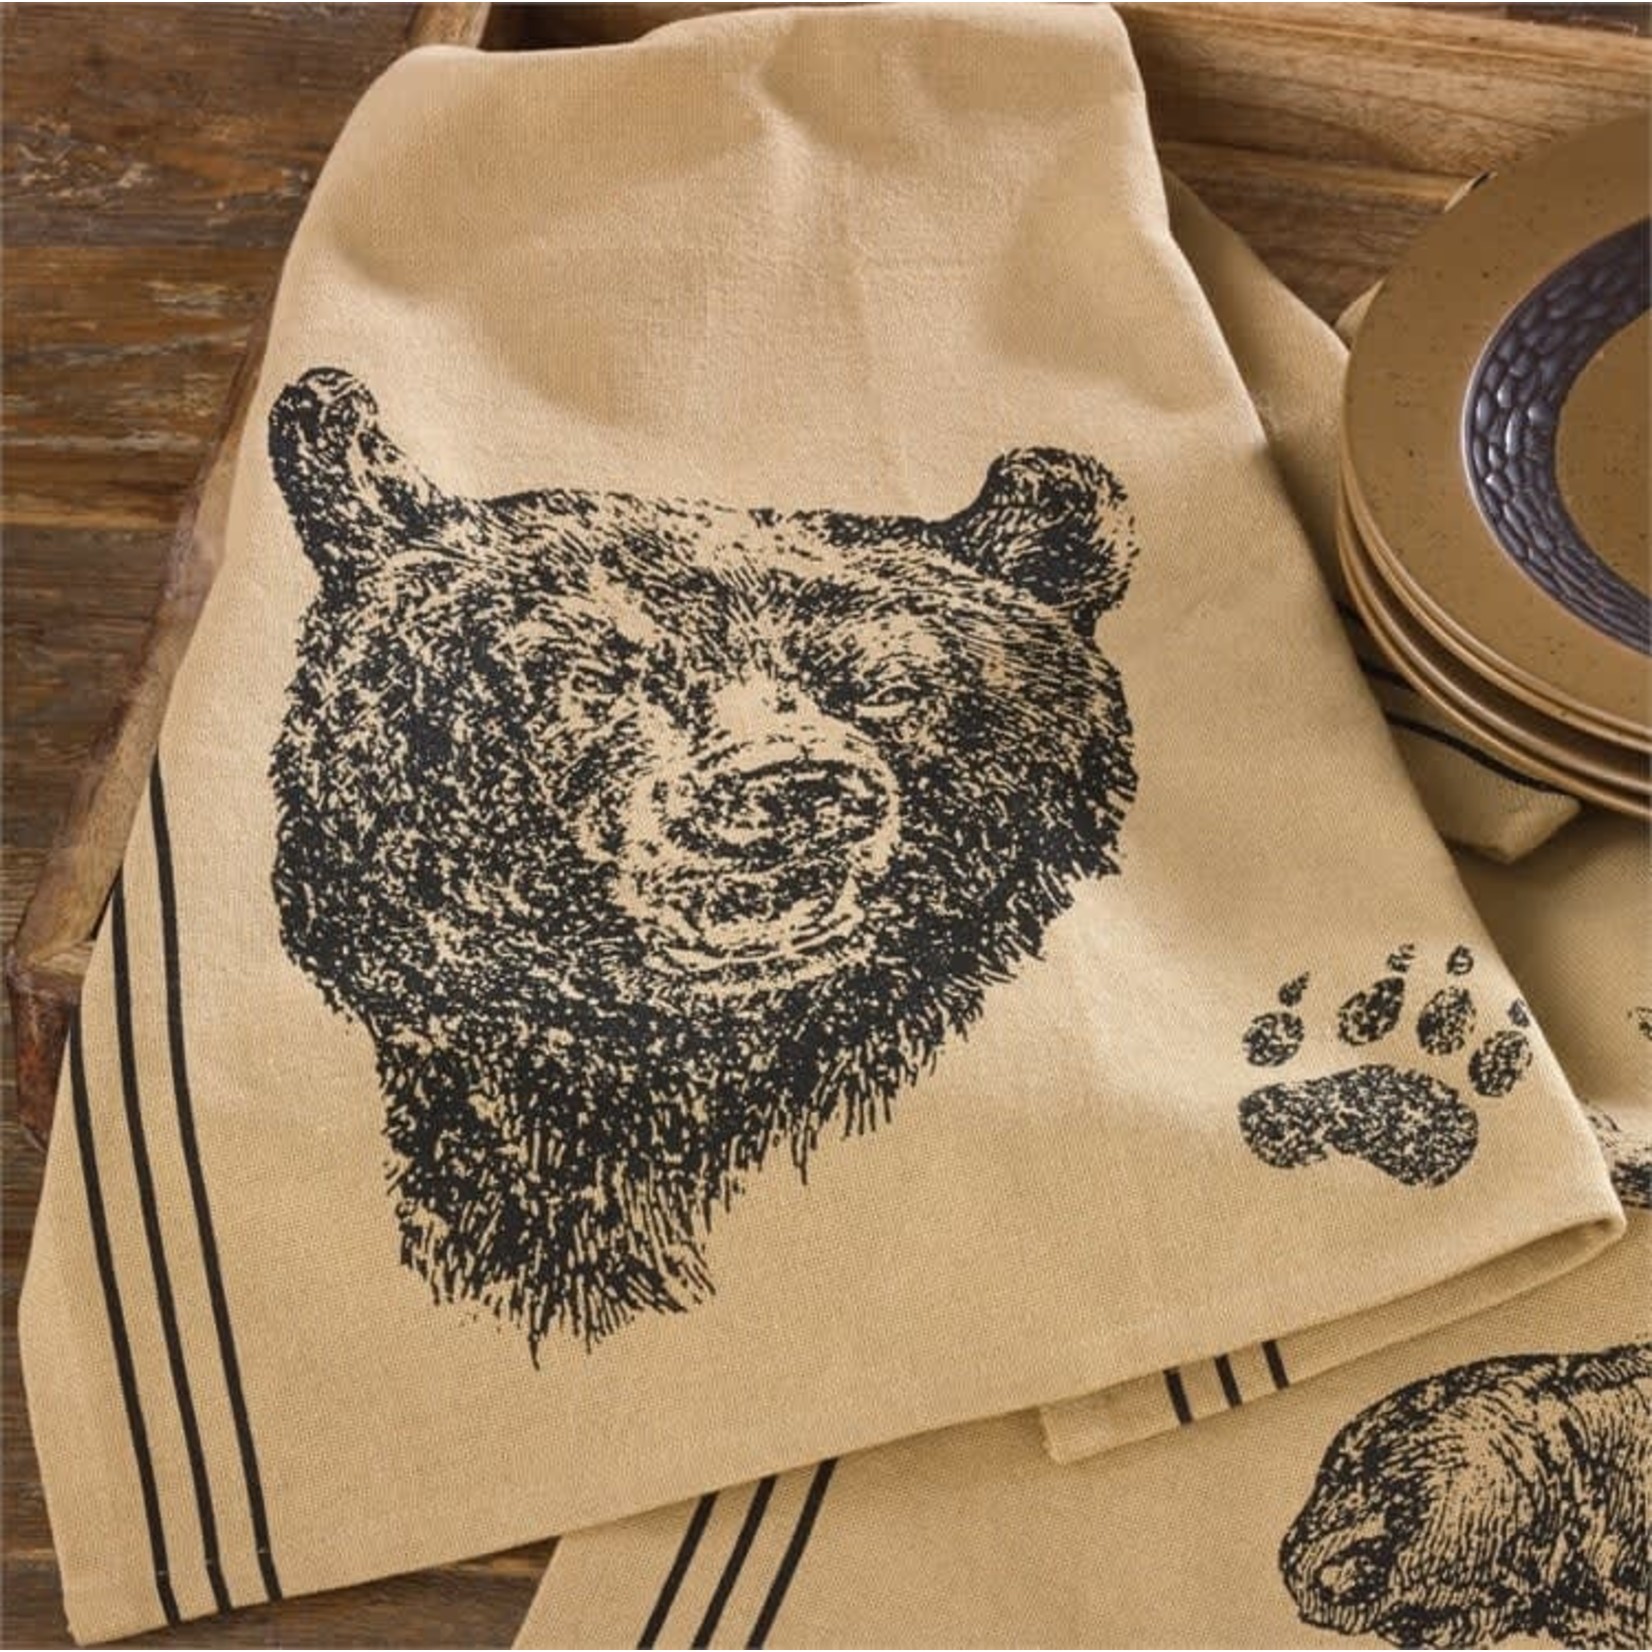 Blk bear printed dishtowel